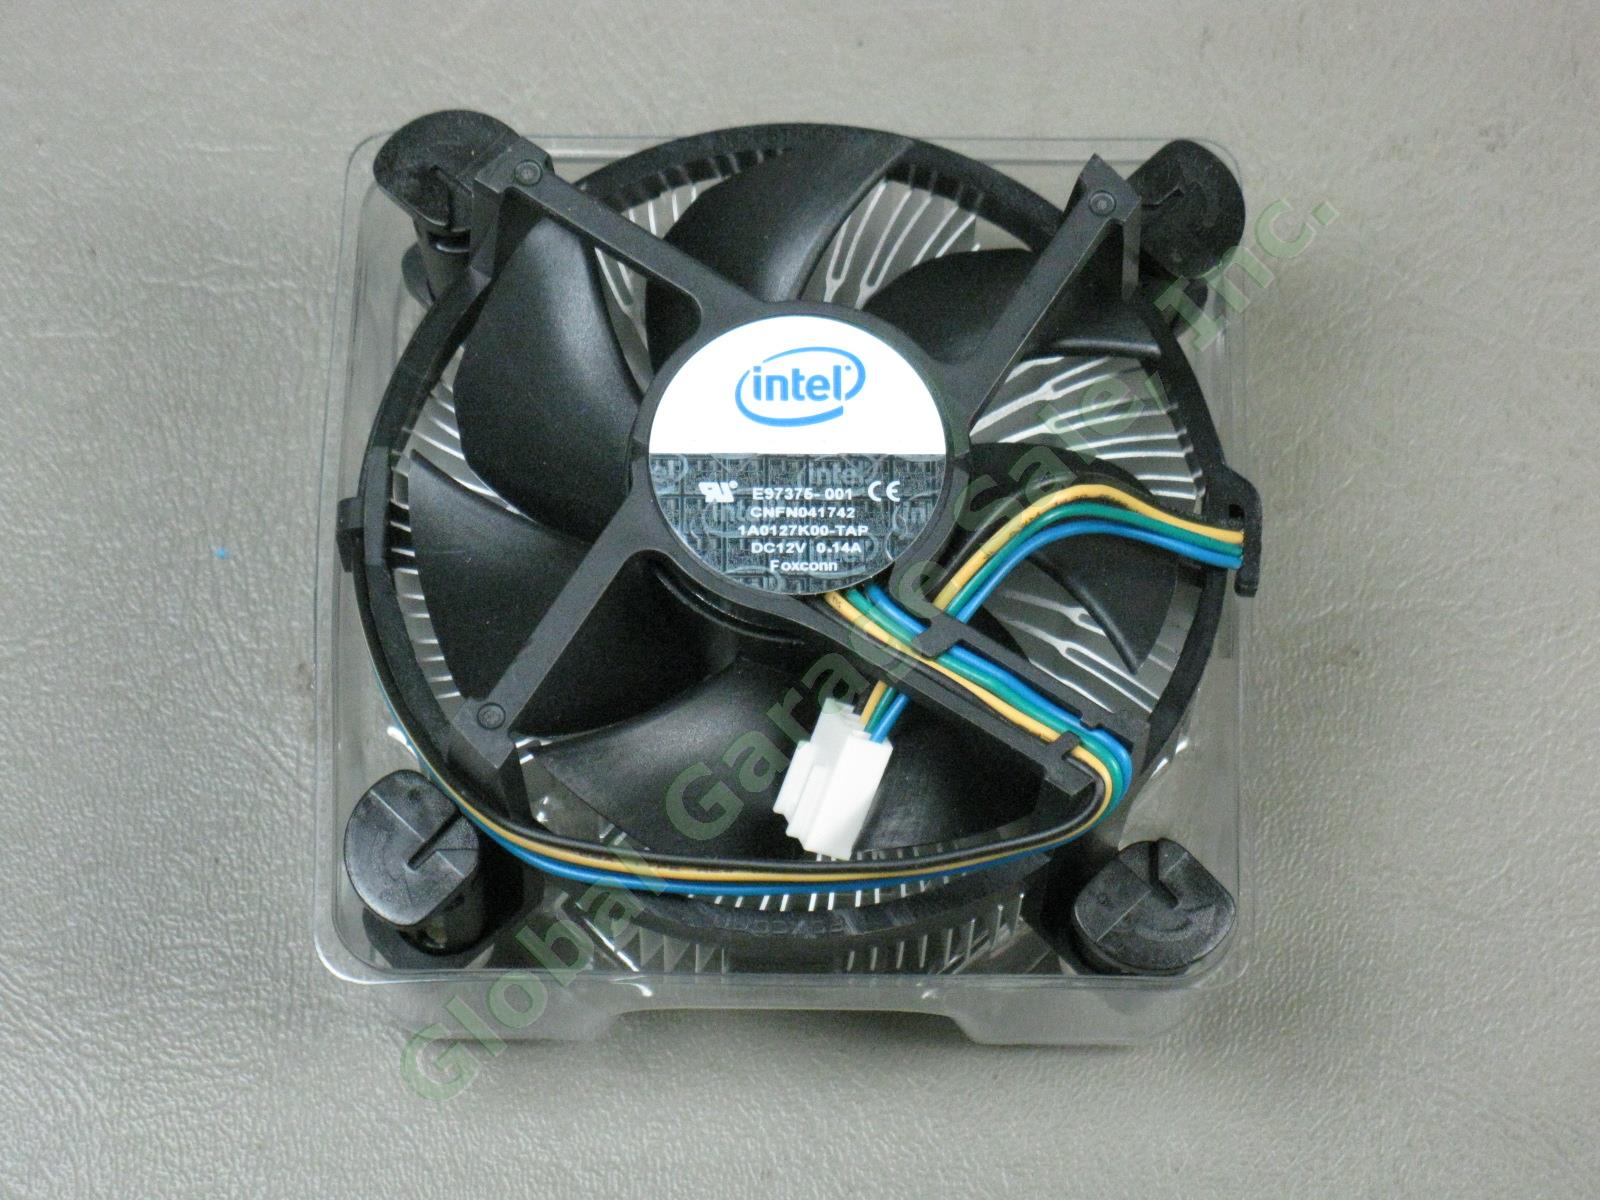 NEW Intel Core 2 Duo E8600 3.33GHz CPU Processor LGA775 Socket T + Heatsink Fan 3